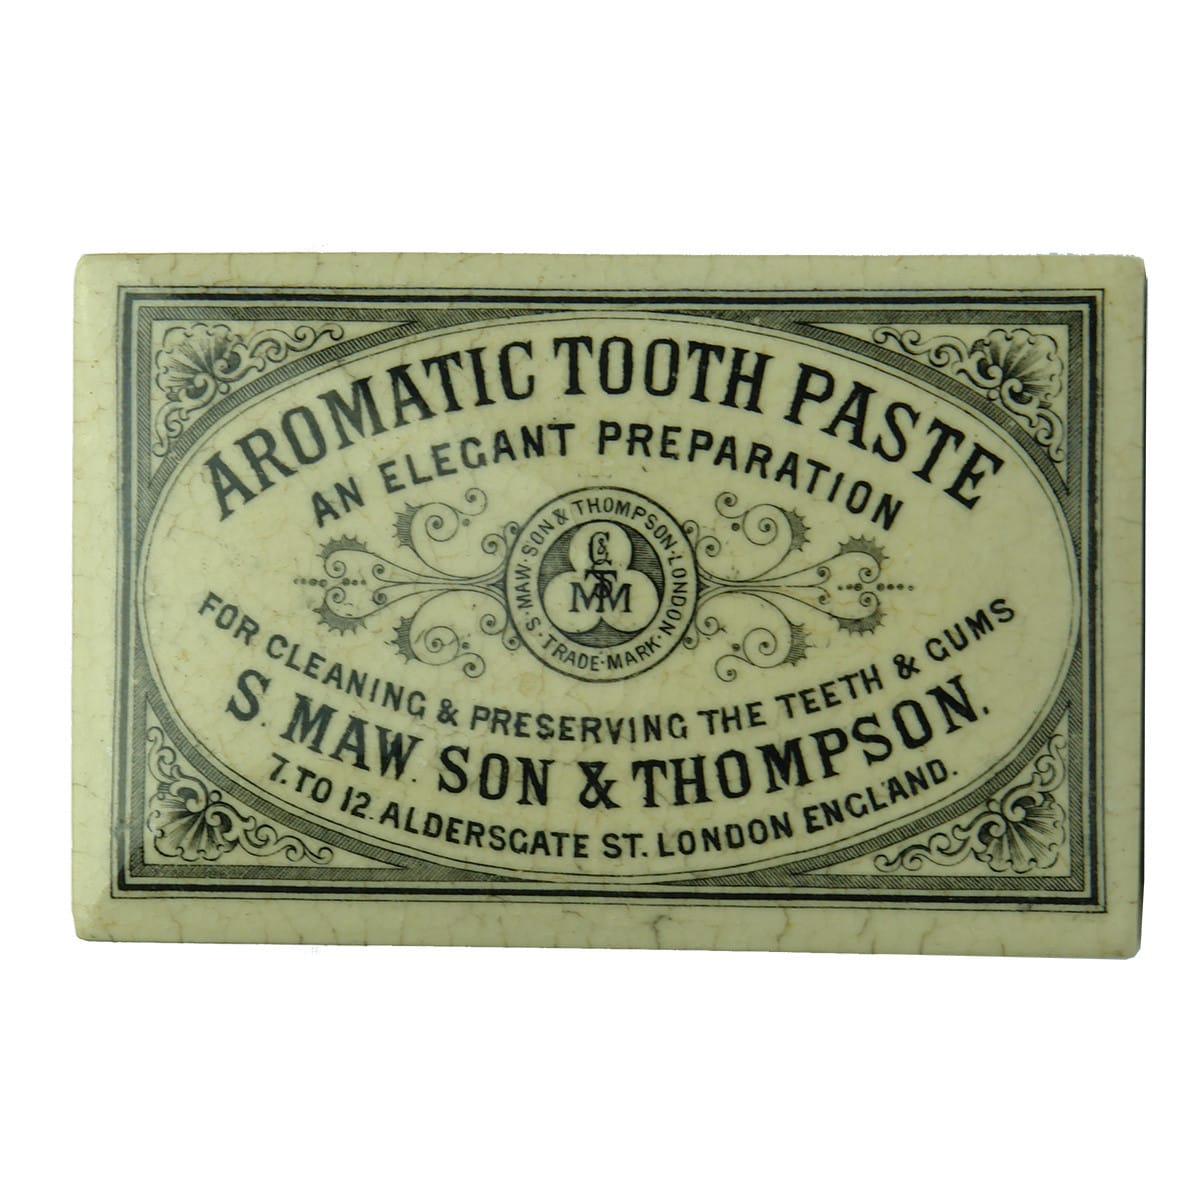 Pot Lid. S. Maw, Son & Thompson, Aldersgate St., London. Aromatic Tooth Paste. Large rectangular lid.